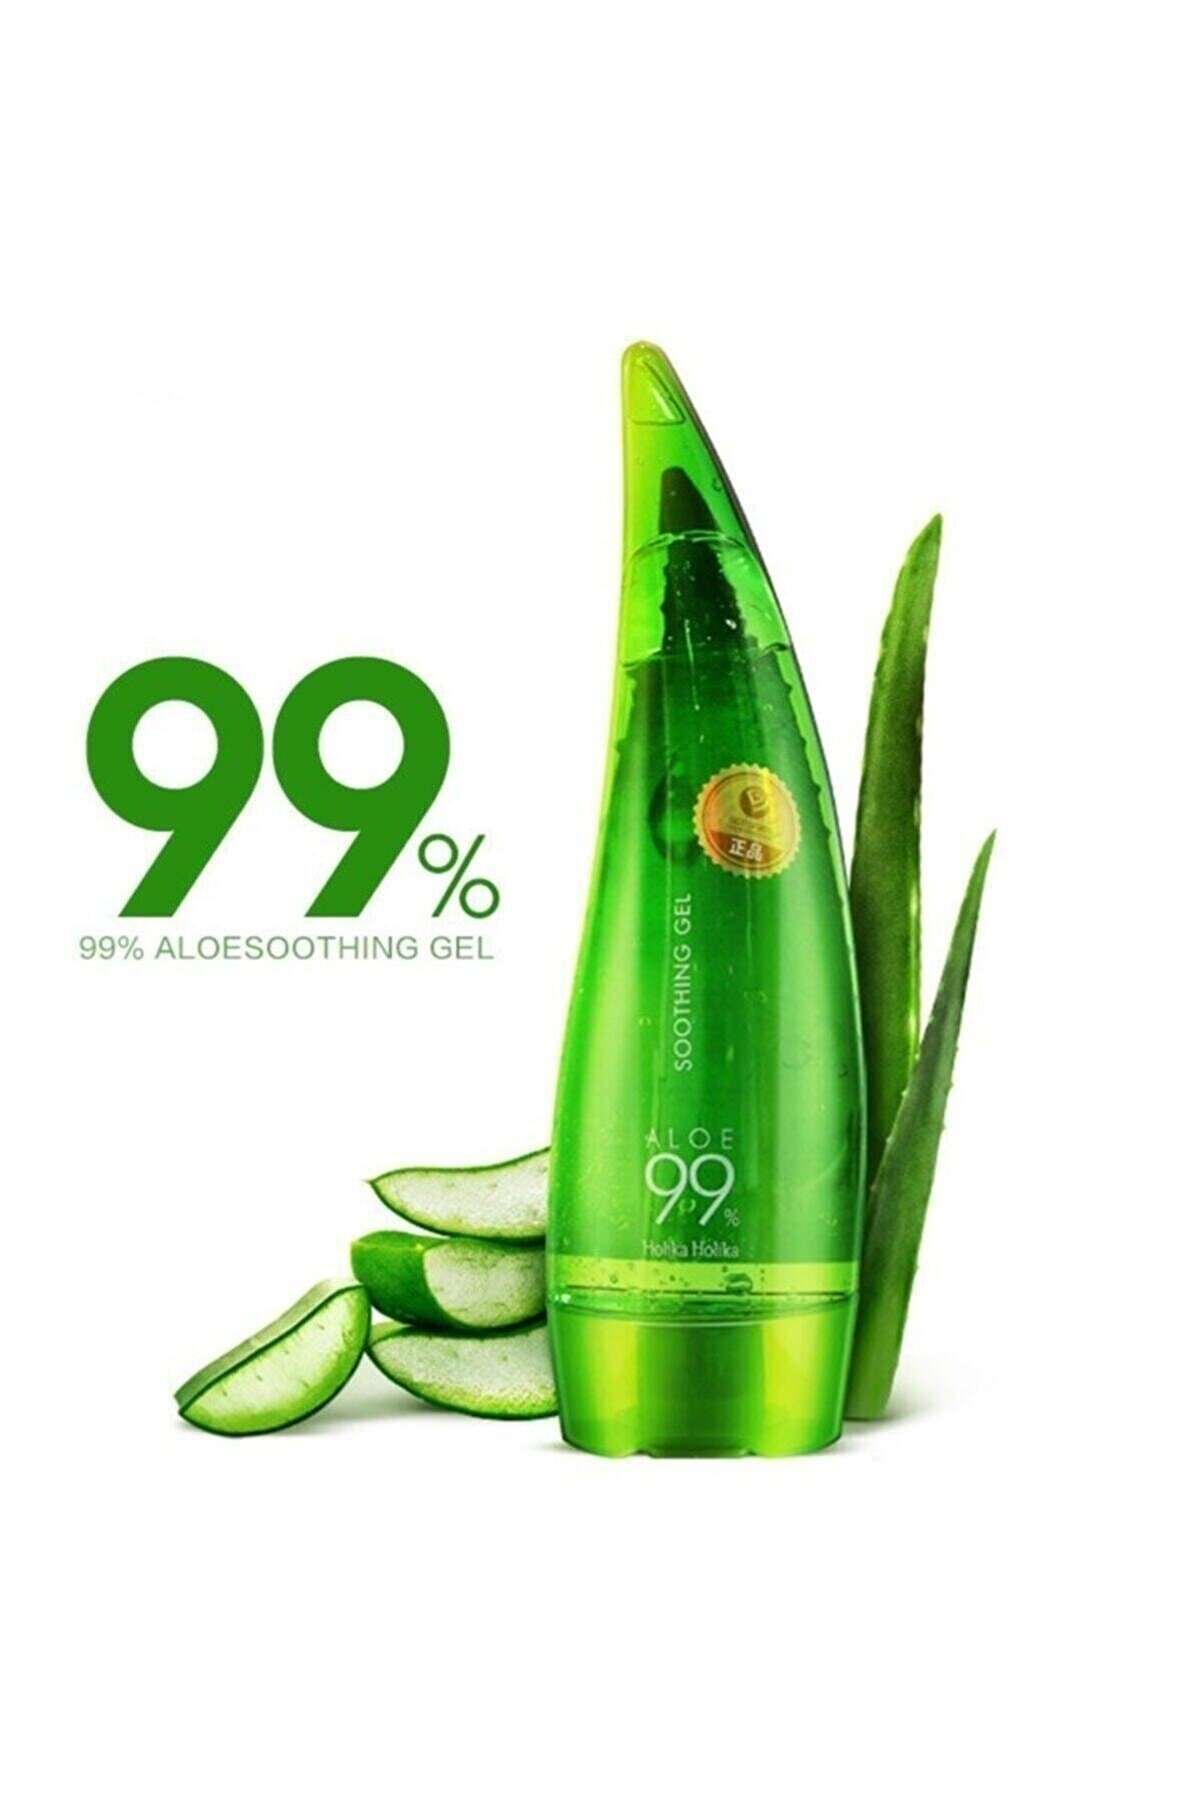 Holika Holika Aloe Vera Jeli - Aloe 99% Soothing Gel 250 ml